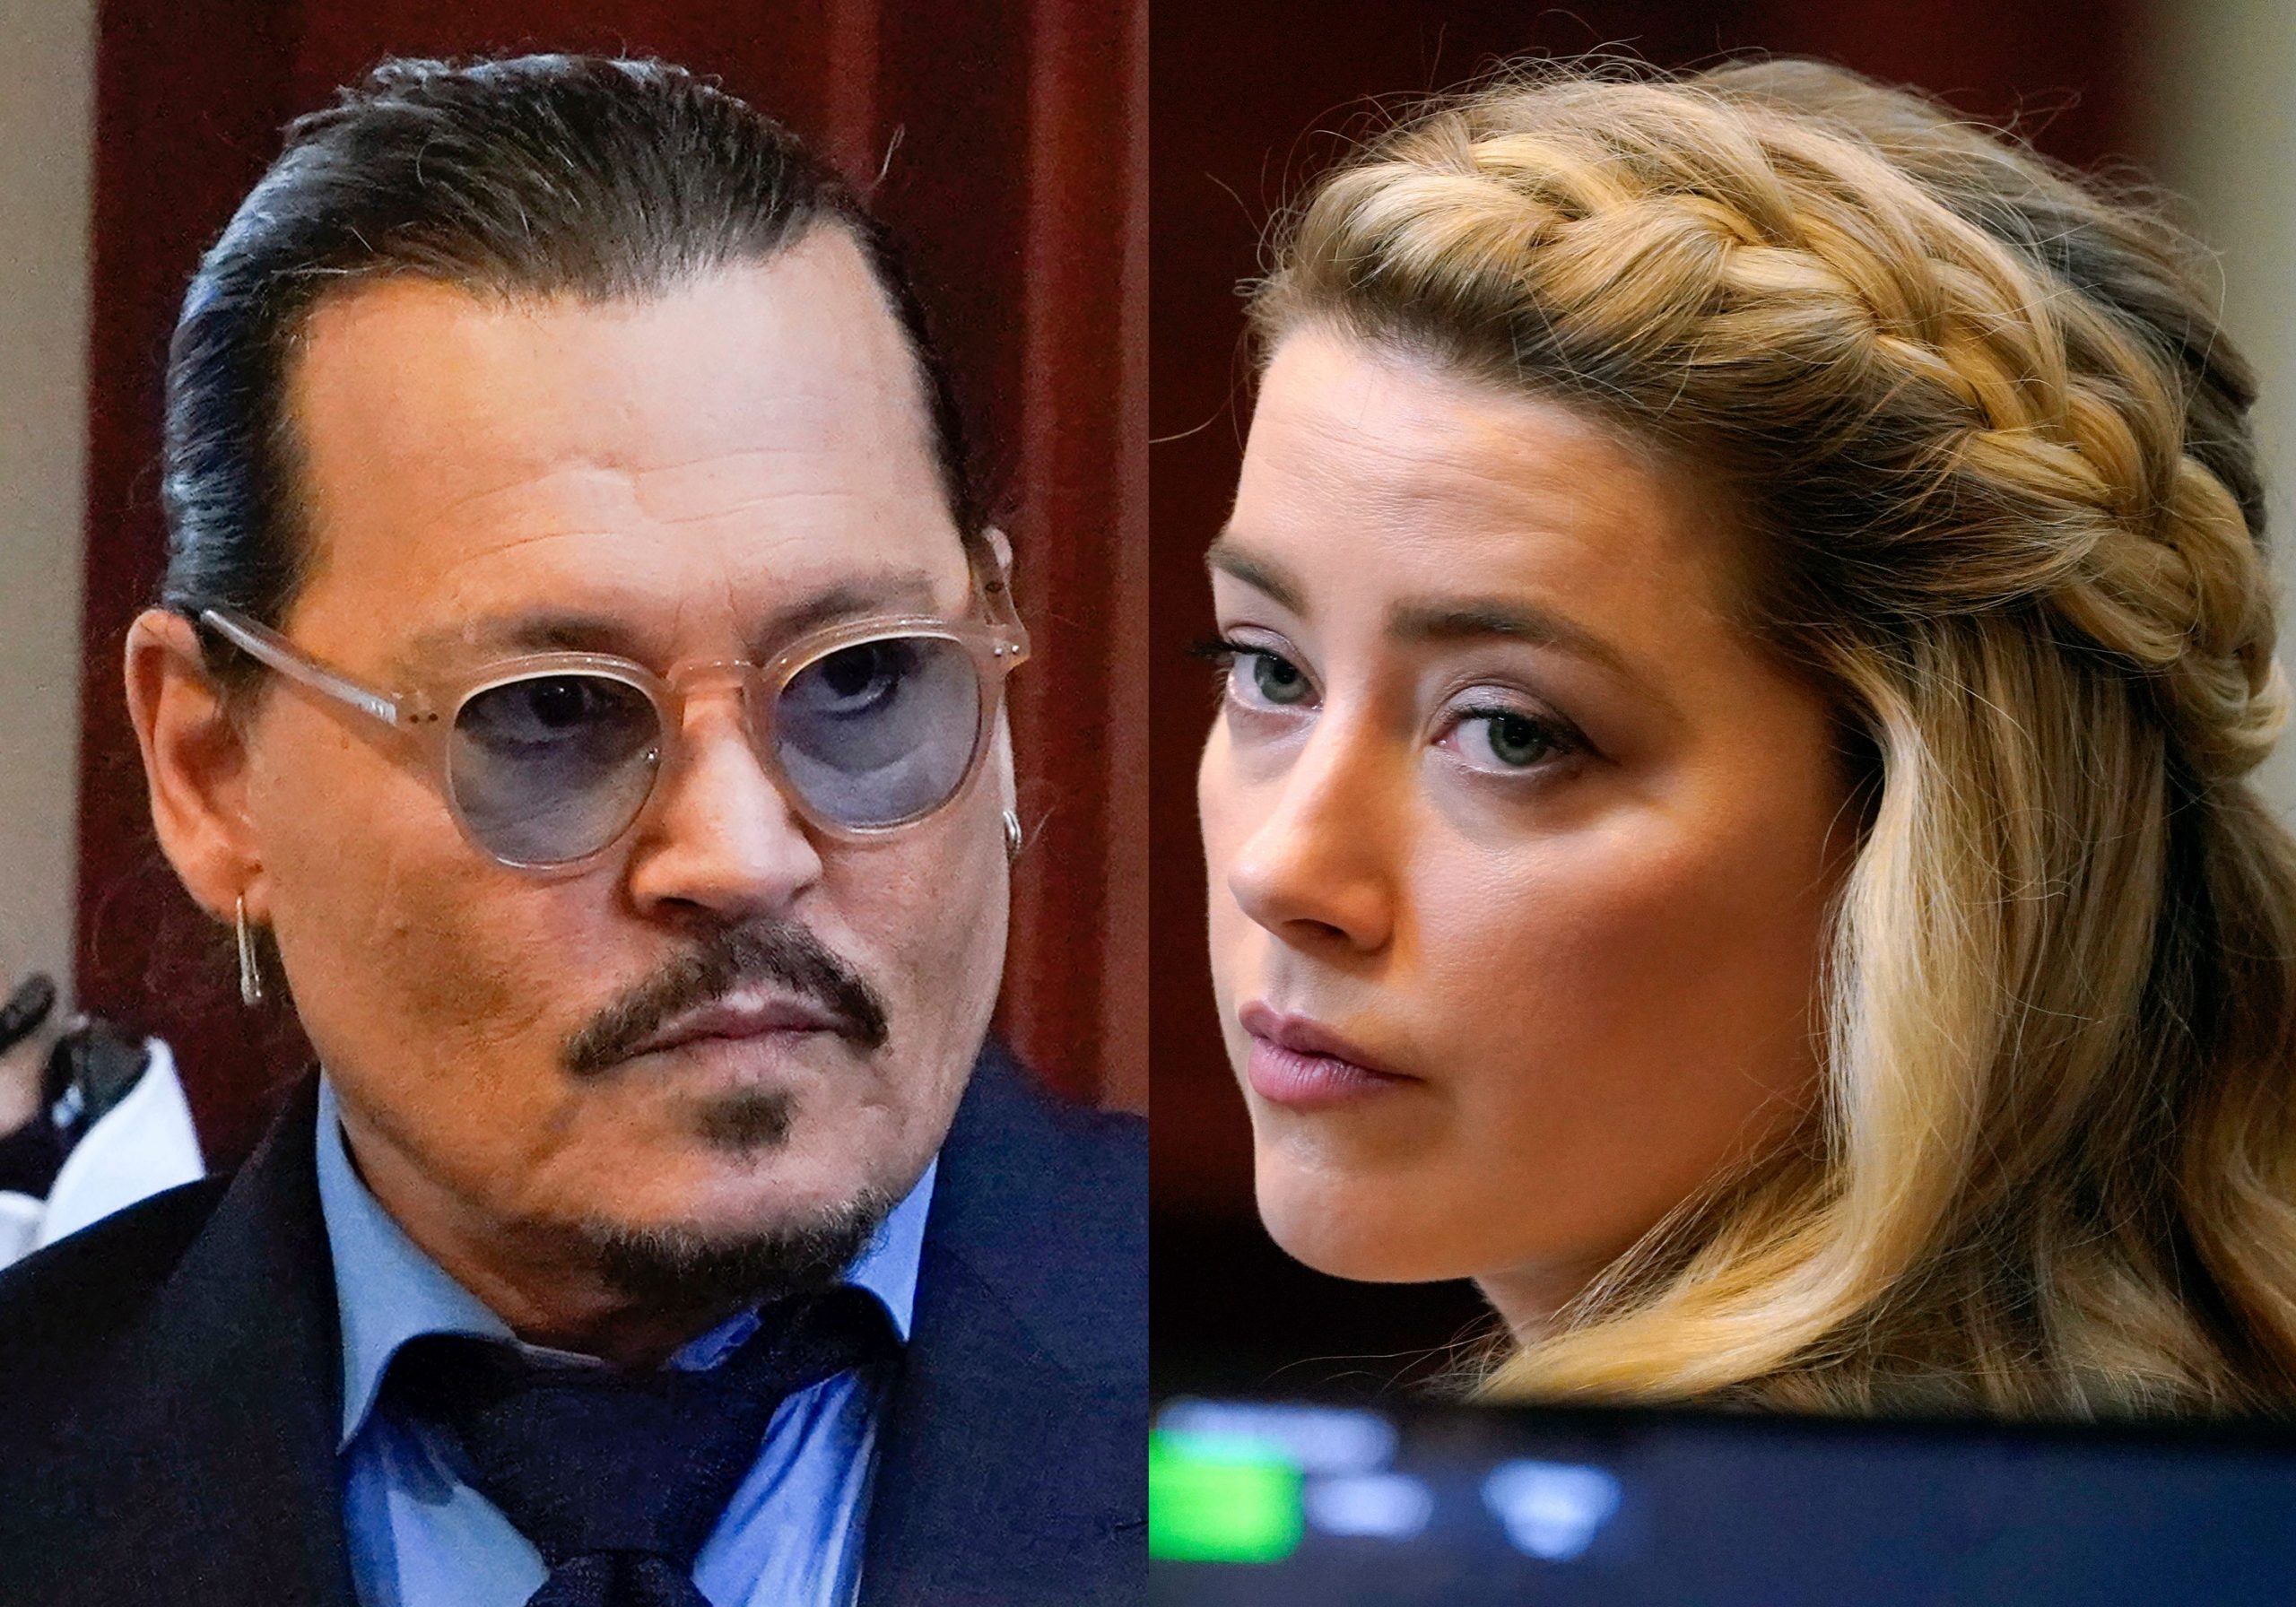 Johnny Depp-Amber Heard trial: 4 things jurors didn’t see or hear